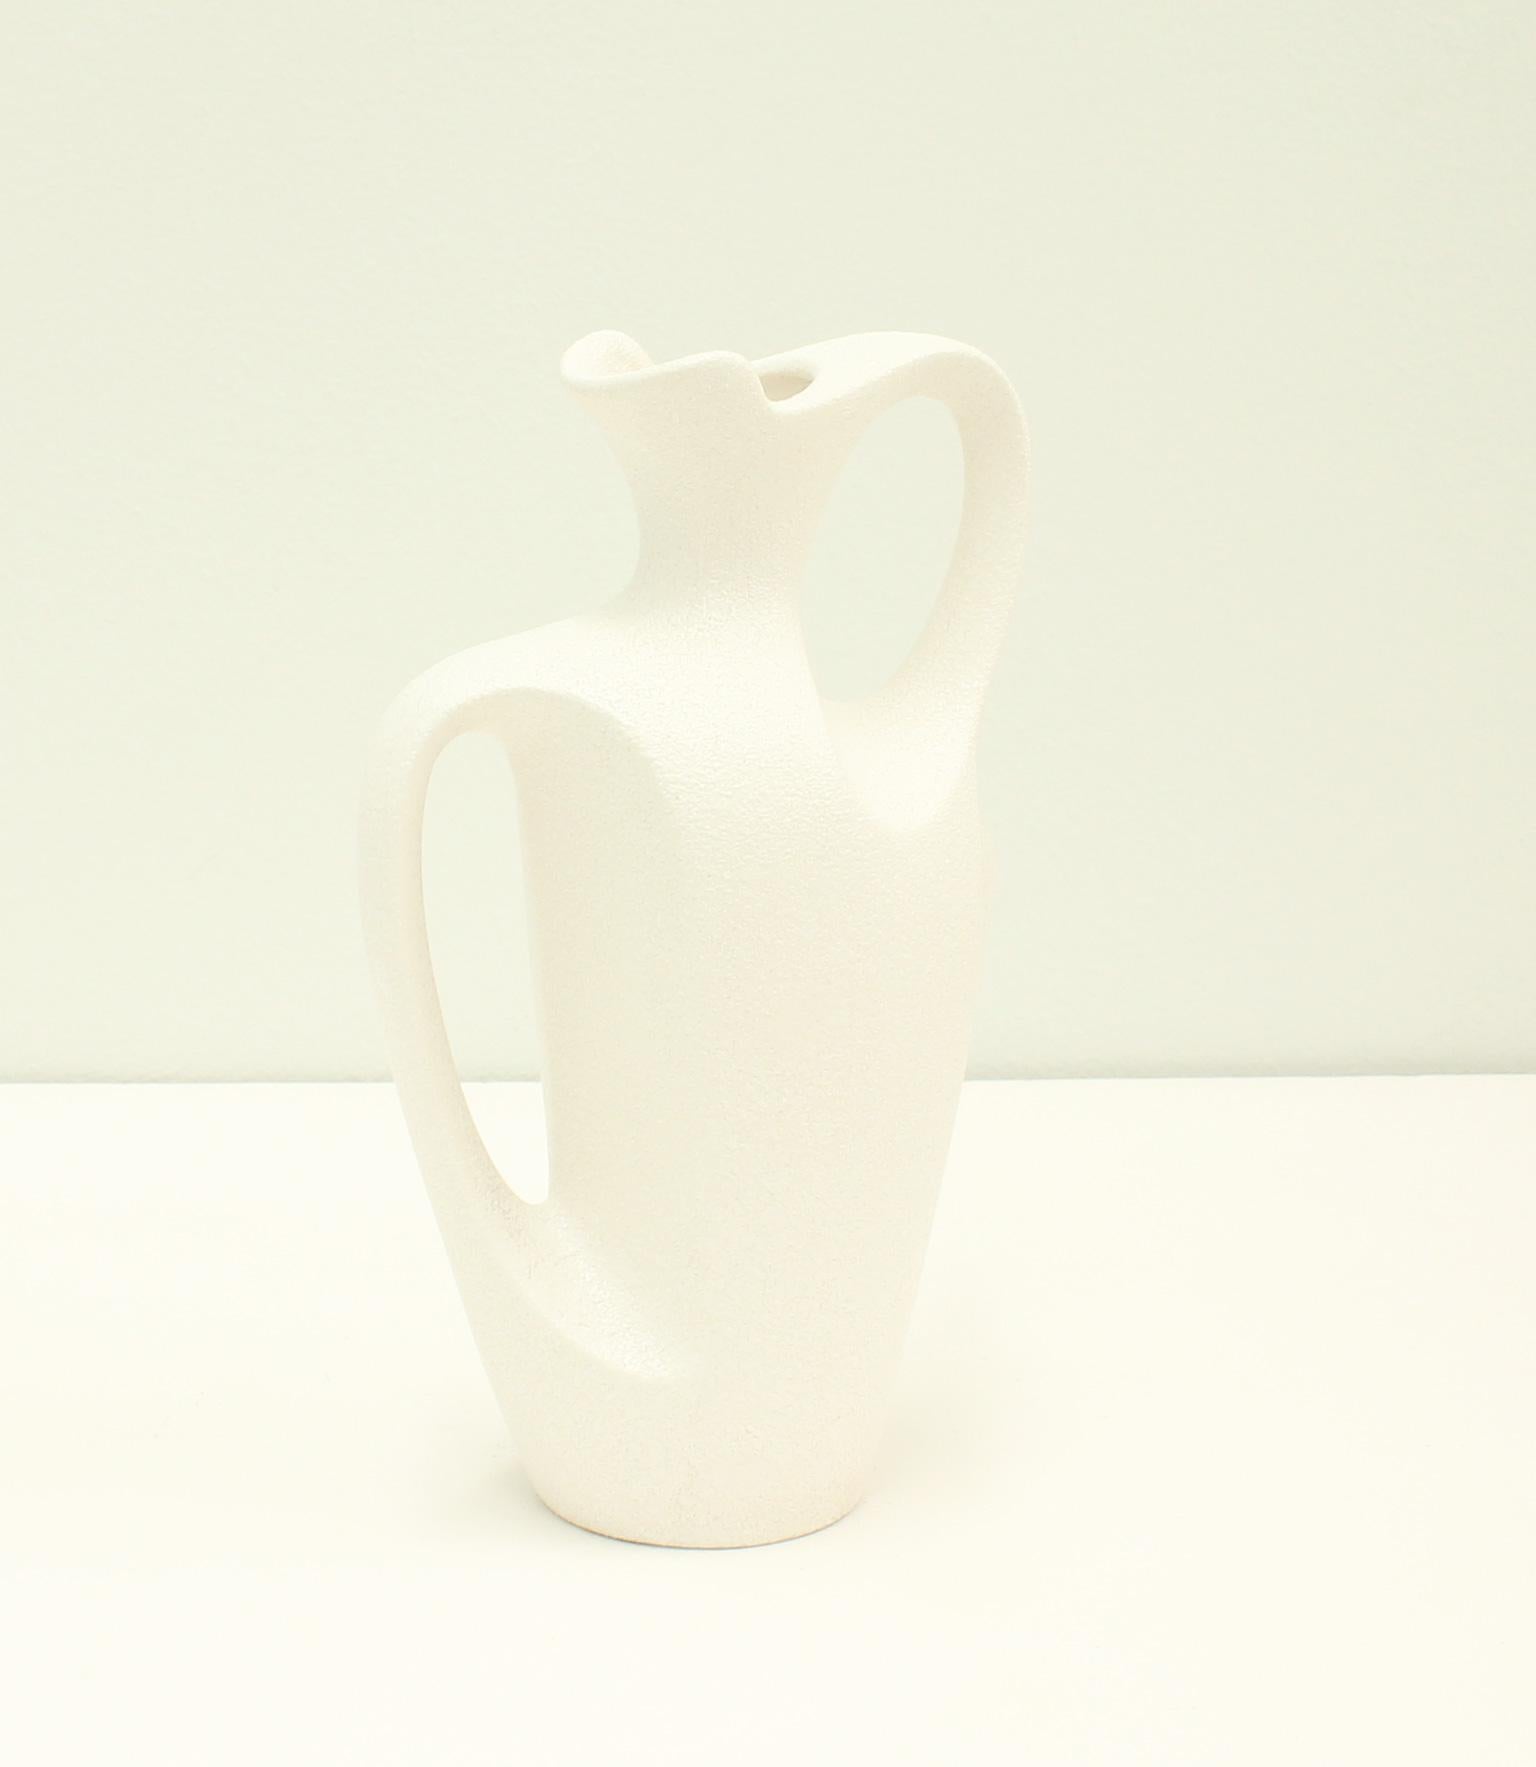 Ceramic jug vase designed by Roberto Rigon and produced by Bertoncello, Italy, 1970's. Ceramic in matte white grainy glaze.